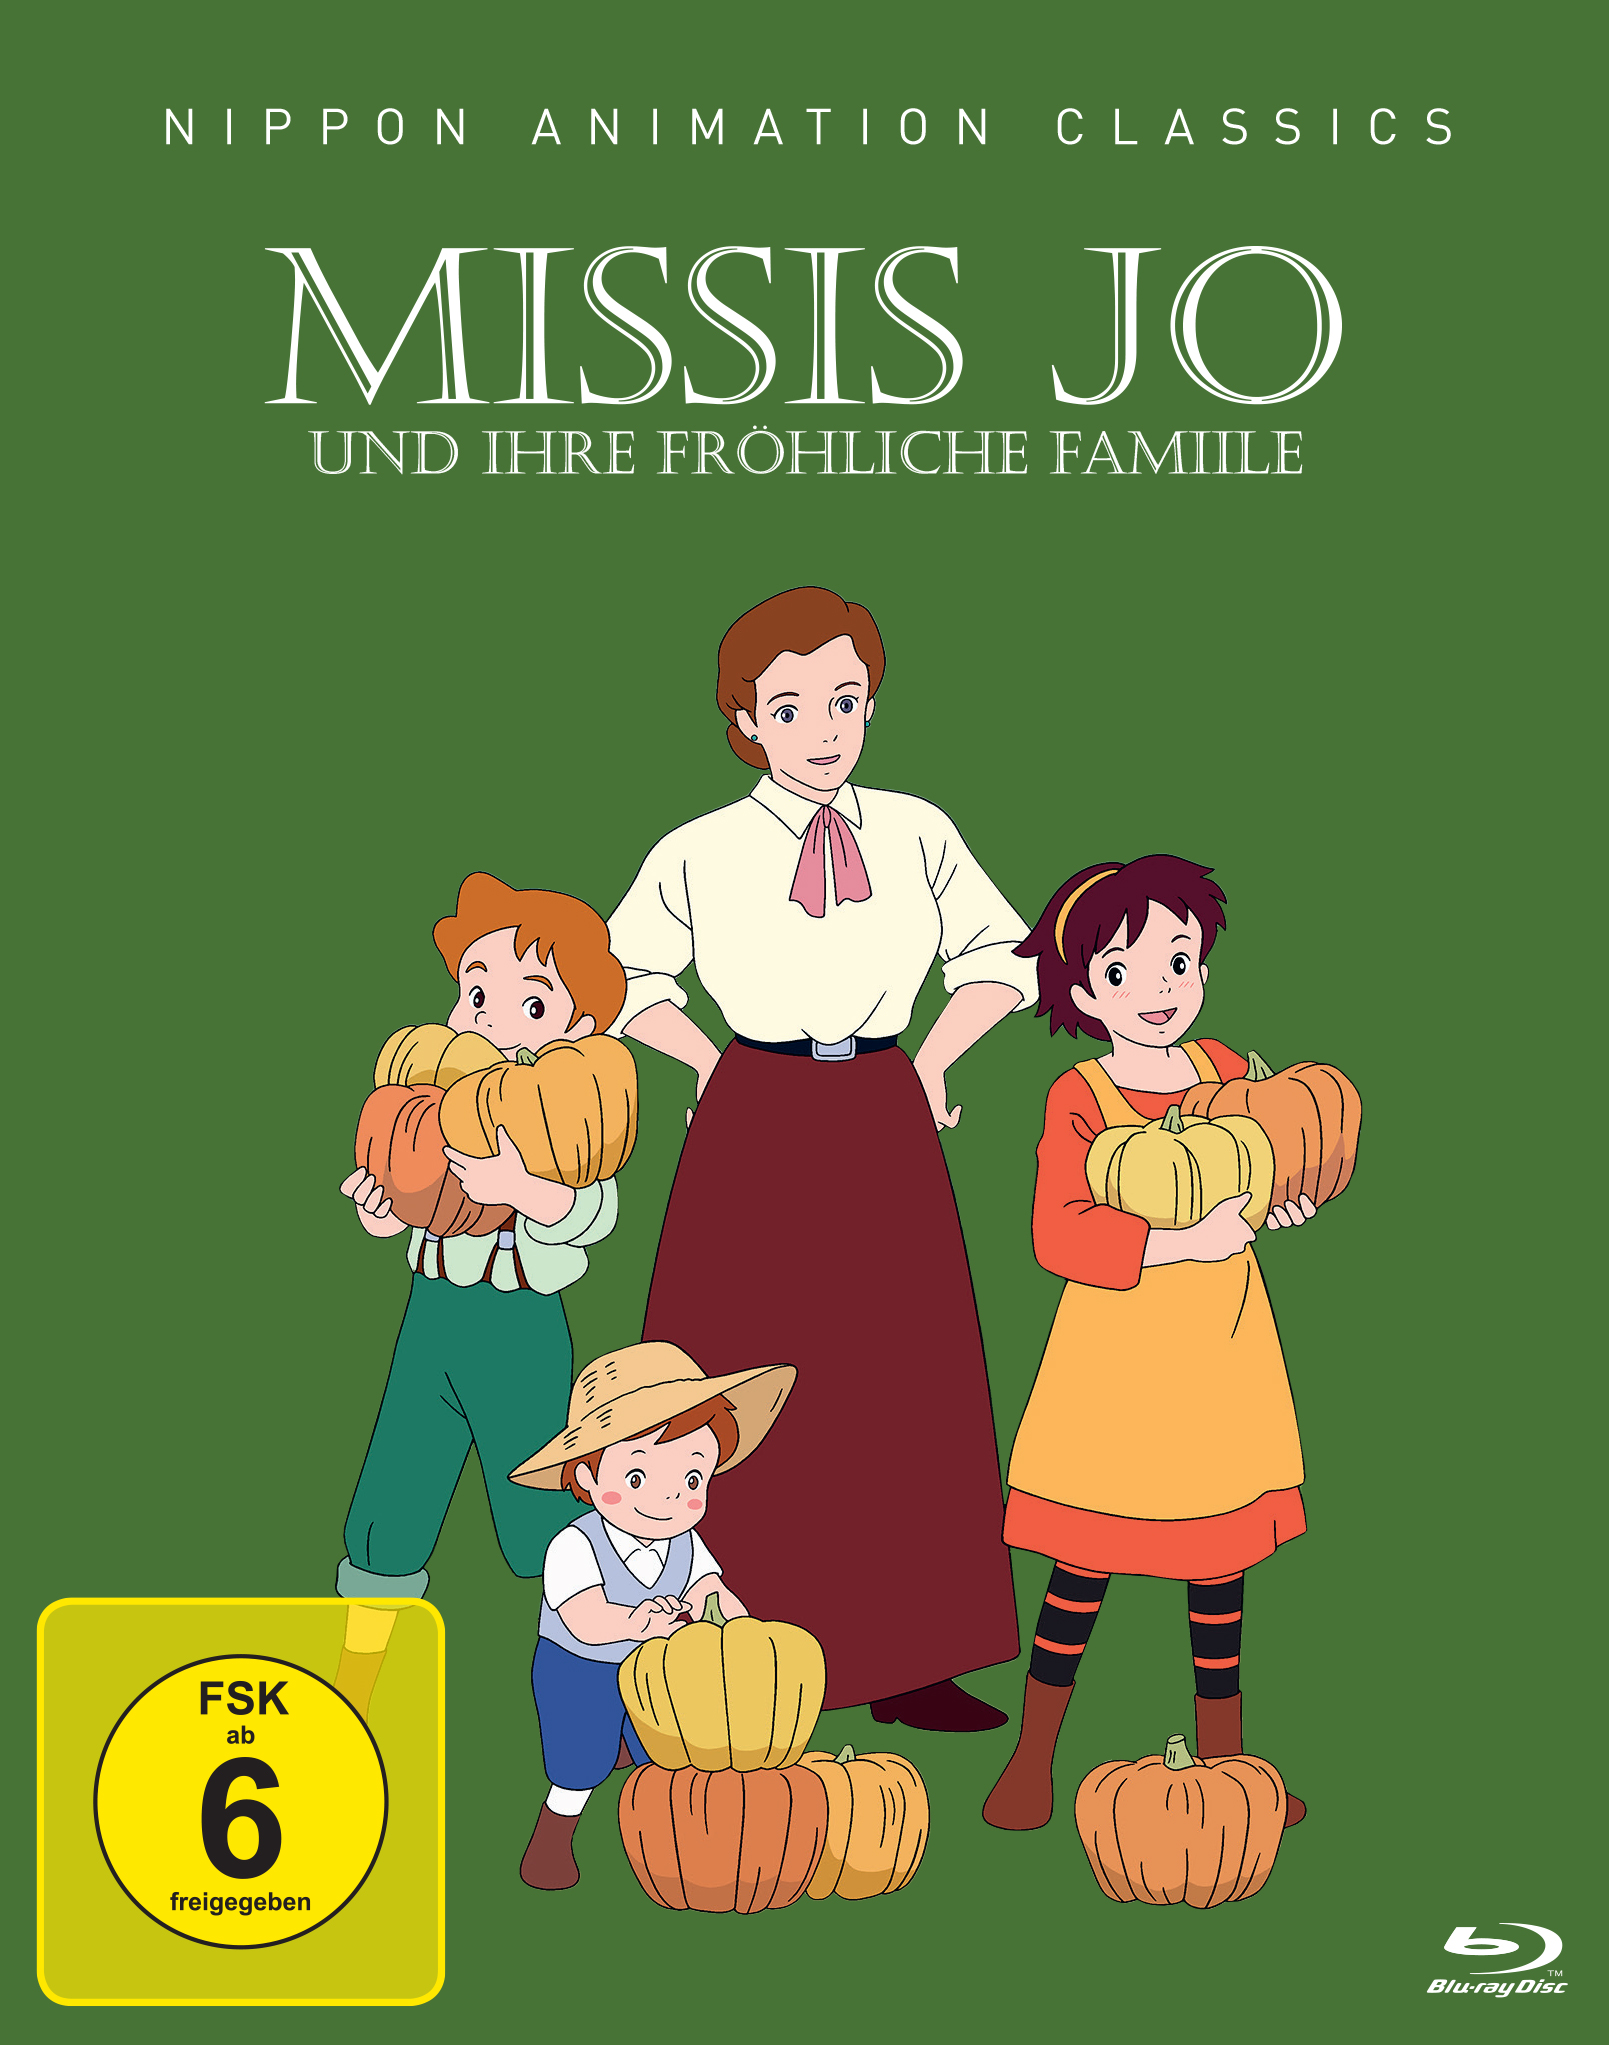 Missis Jo und ihre fröhliche Familie - Complete Edition [Blu-ray] Cover